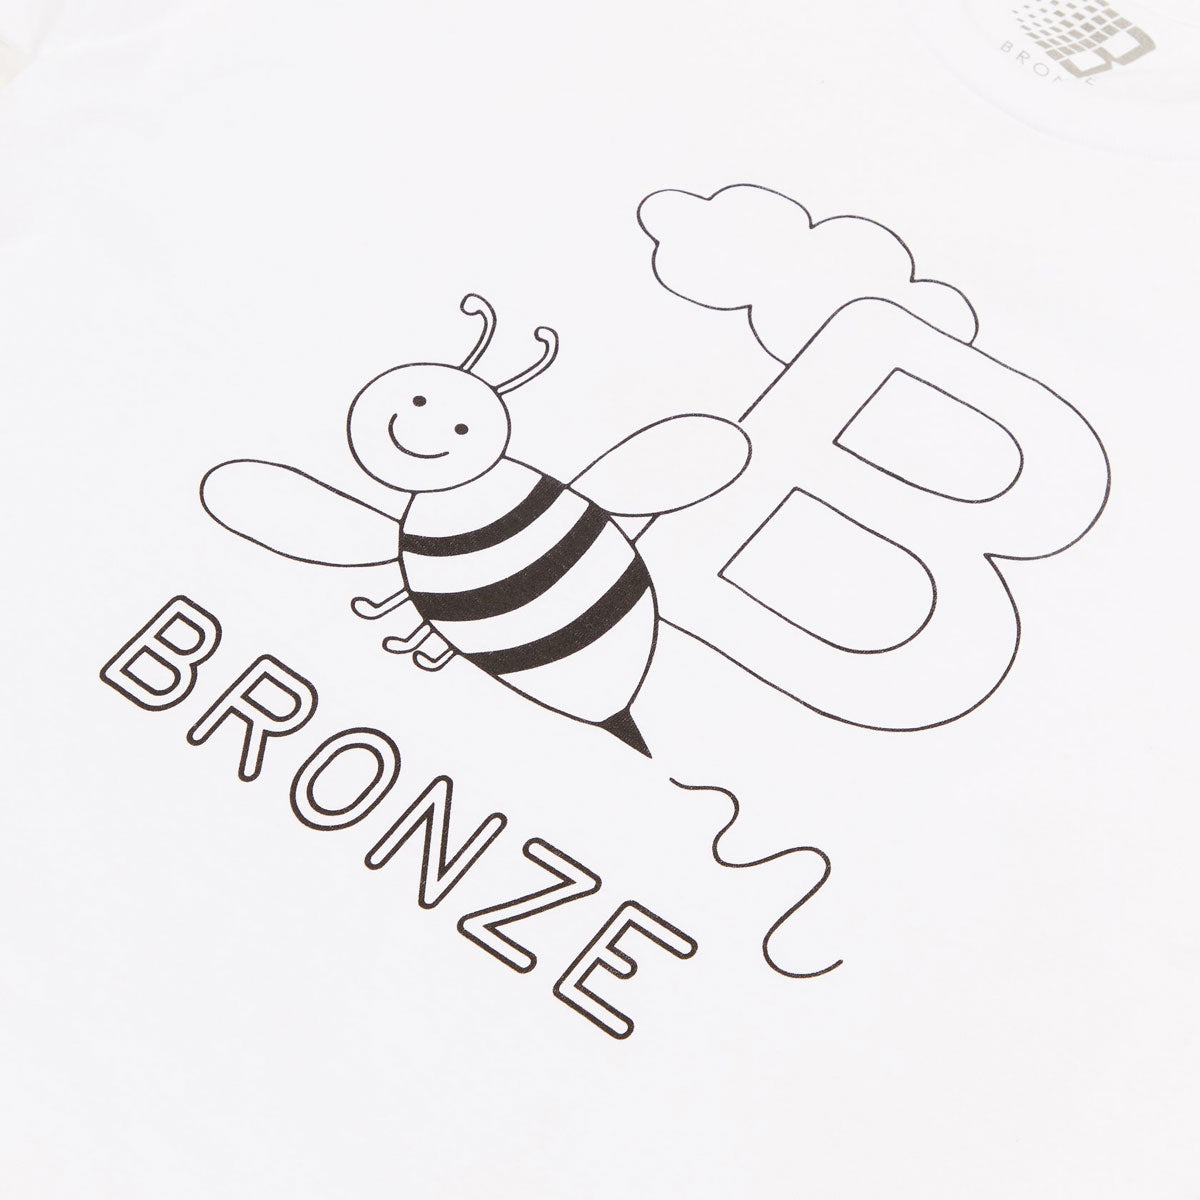 Bronze 56k B Is For Bronze T-Shirt - White image 2